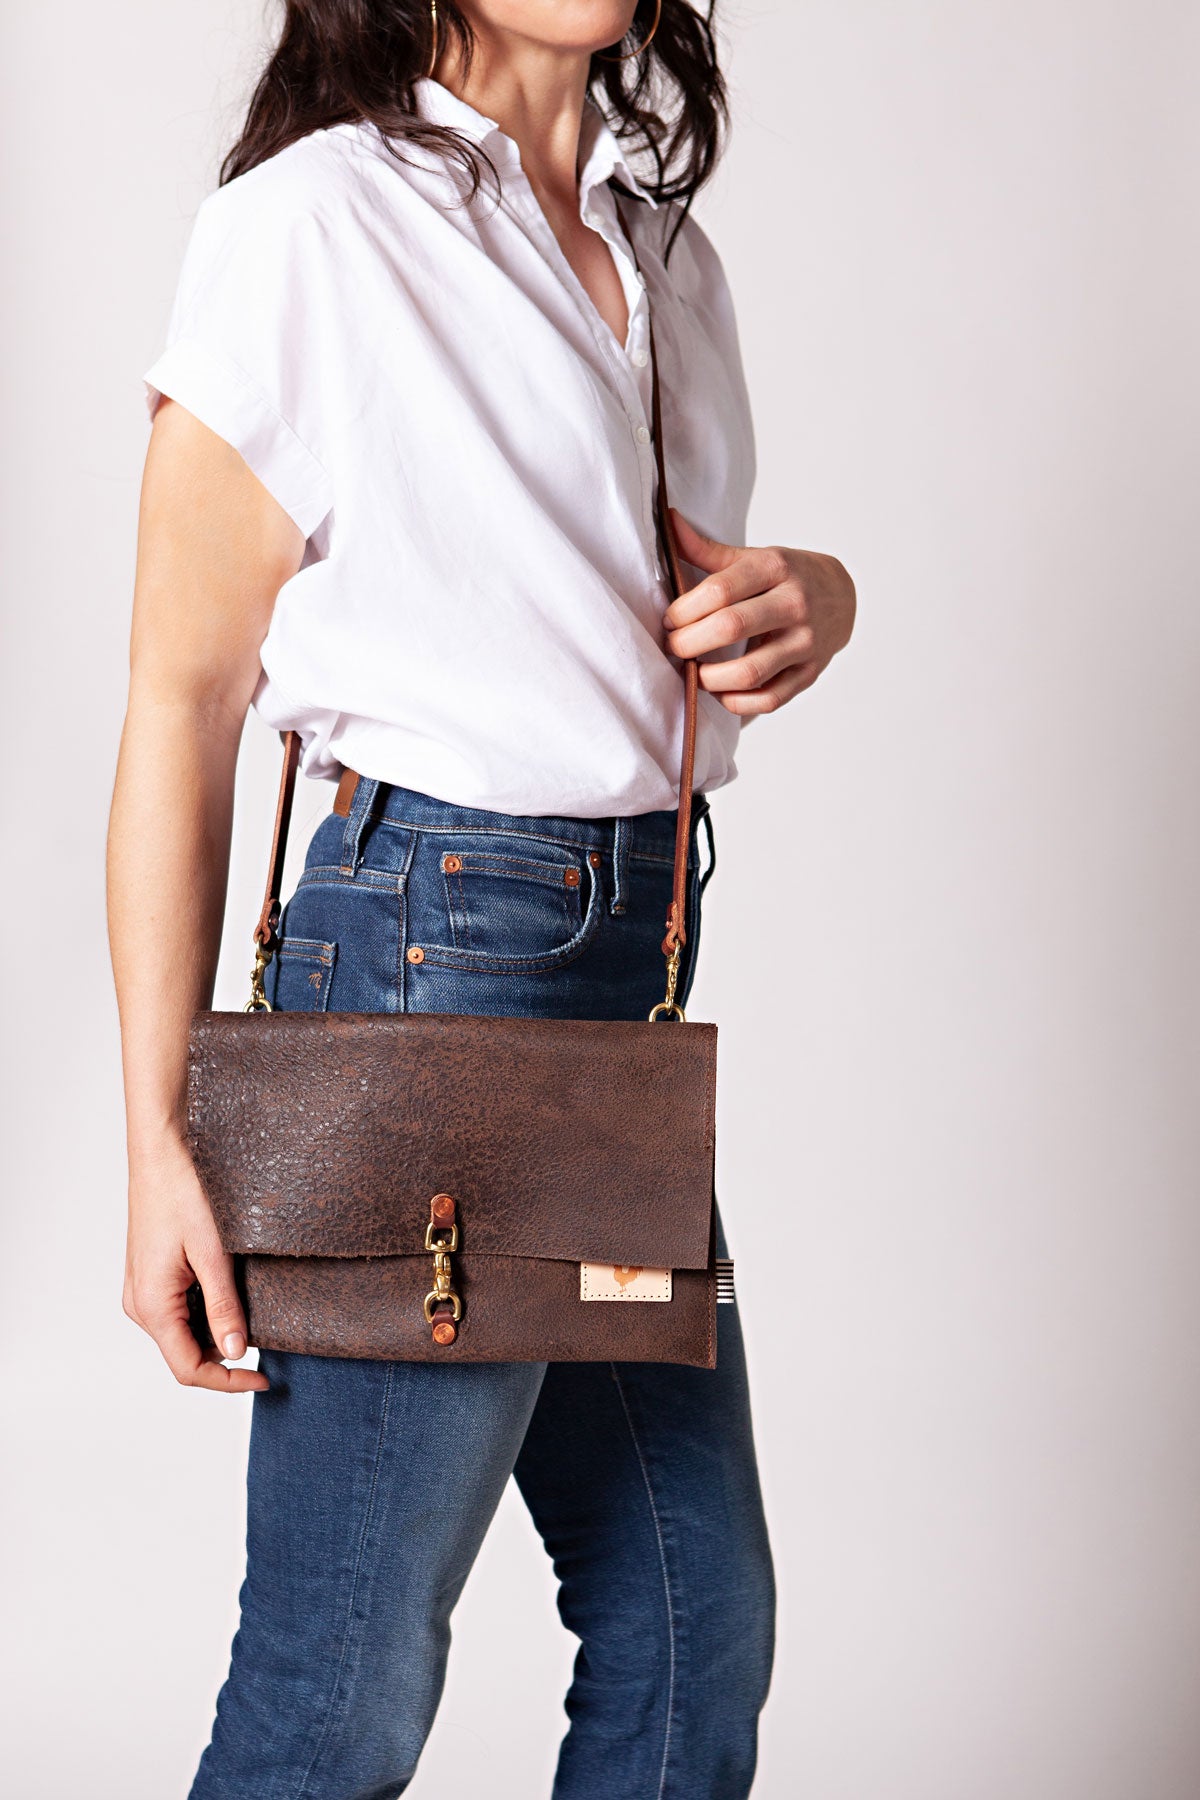 Trigger Crossbody (Black)- Designer leather Handbags